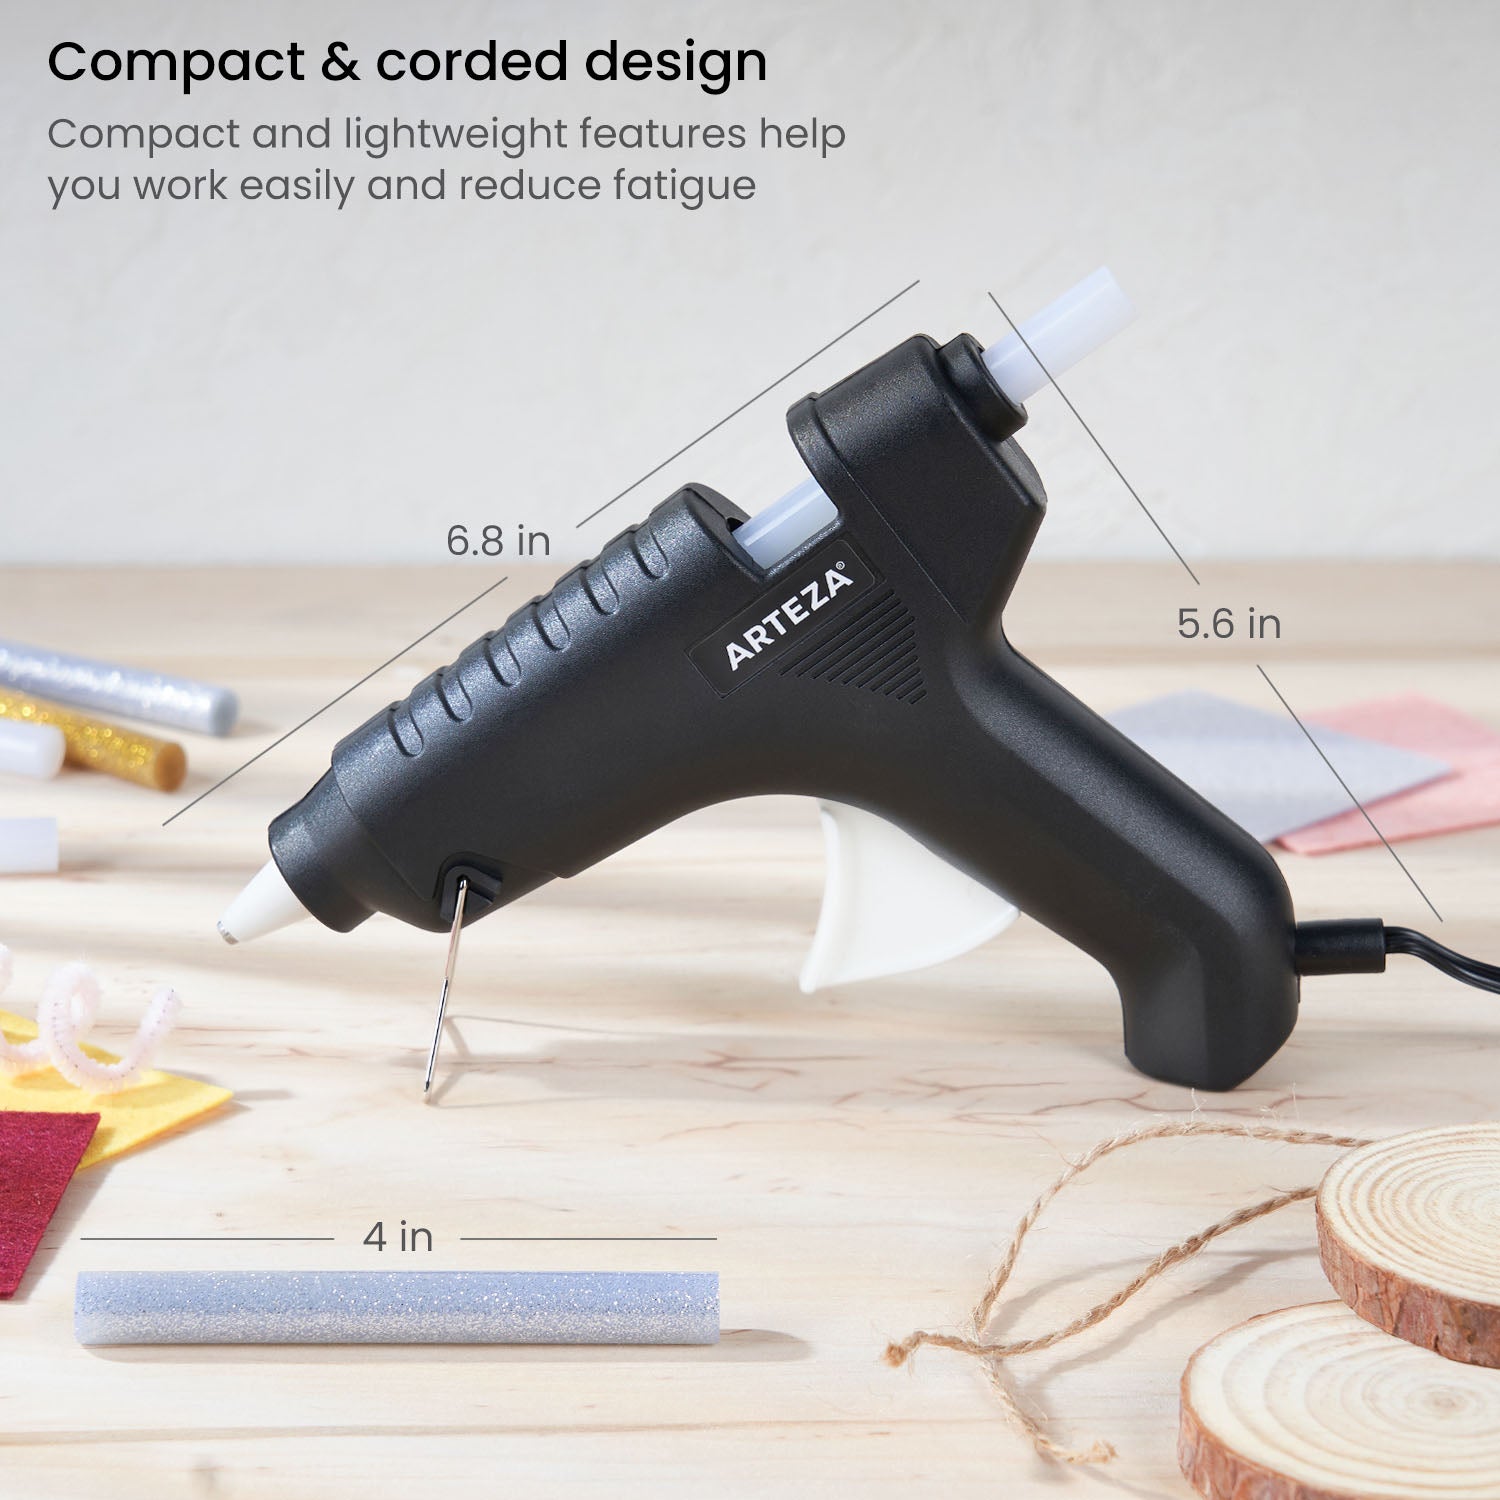 atolla 35W Mini Hot Melt Glue Gun Kit with 10 pcs Glue Sticks（T101）